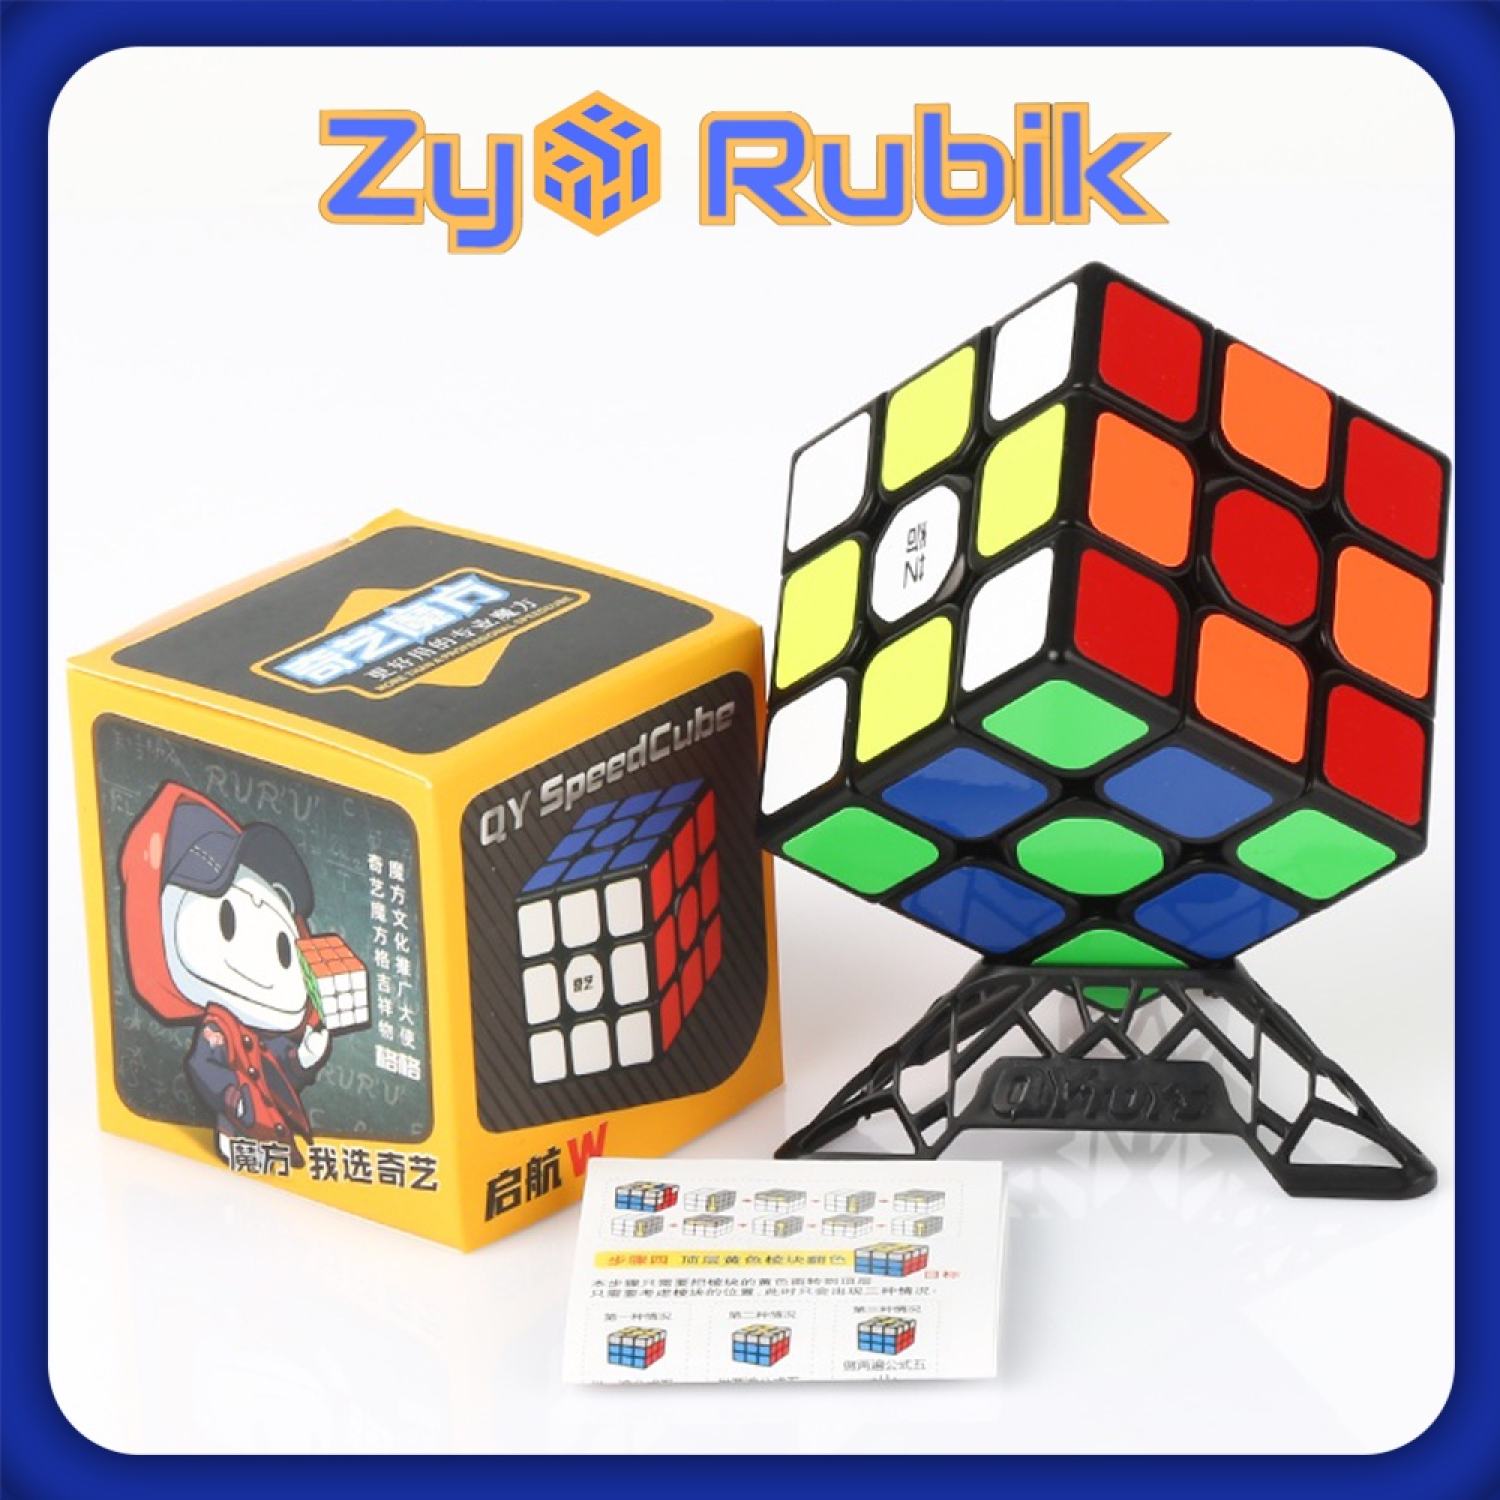 Rubik 3x3 Combo Qiyi Sail W + Đế QiYi DNA ( Full màu )/ Sail W (Màu Đen/ Trắng) + Đế QiYi DNA ( Full màu ) - ZyO Rubik